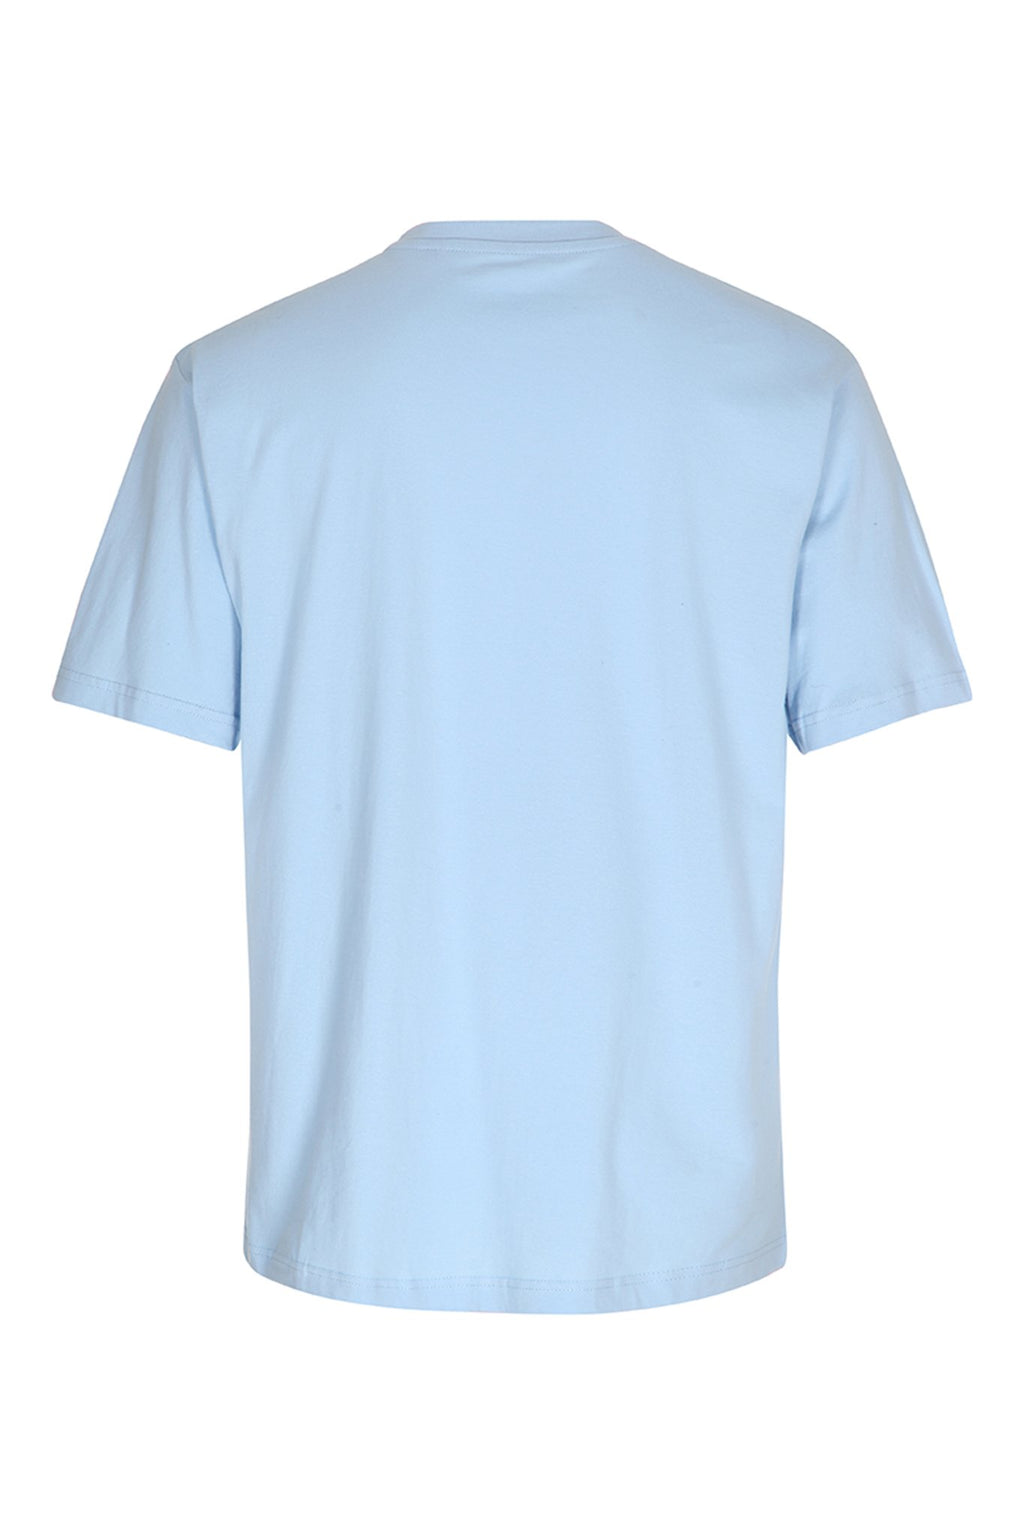 Basic Kids' T-Shirt - Light Blue